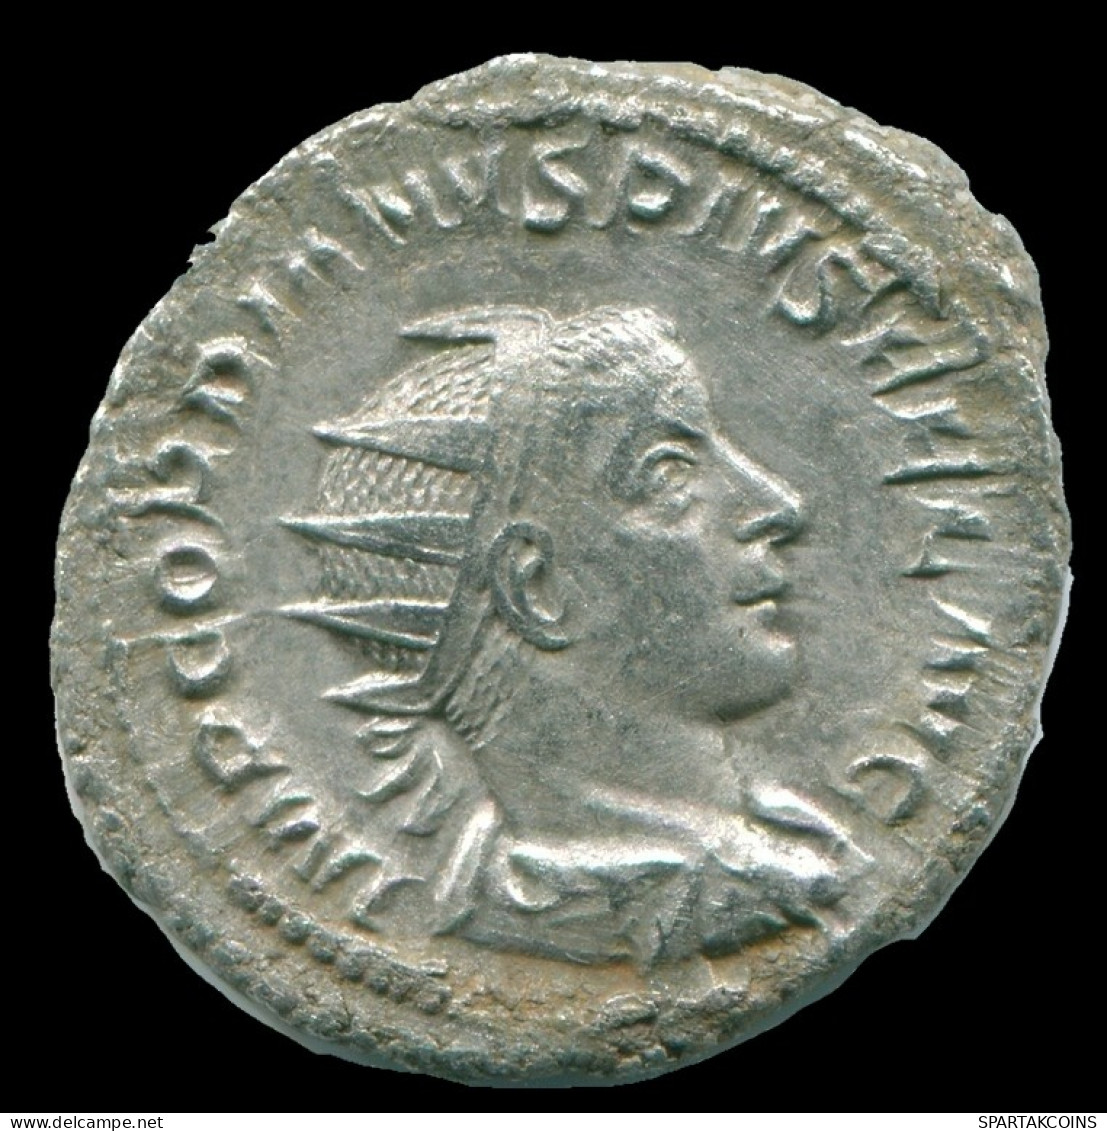 GORDIAN III AR ANTONINIANUS ROME AD 241 P M TR P IIII COS II P P #ANC13142.38.E.A - La Crisis Militar (235 / 284)